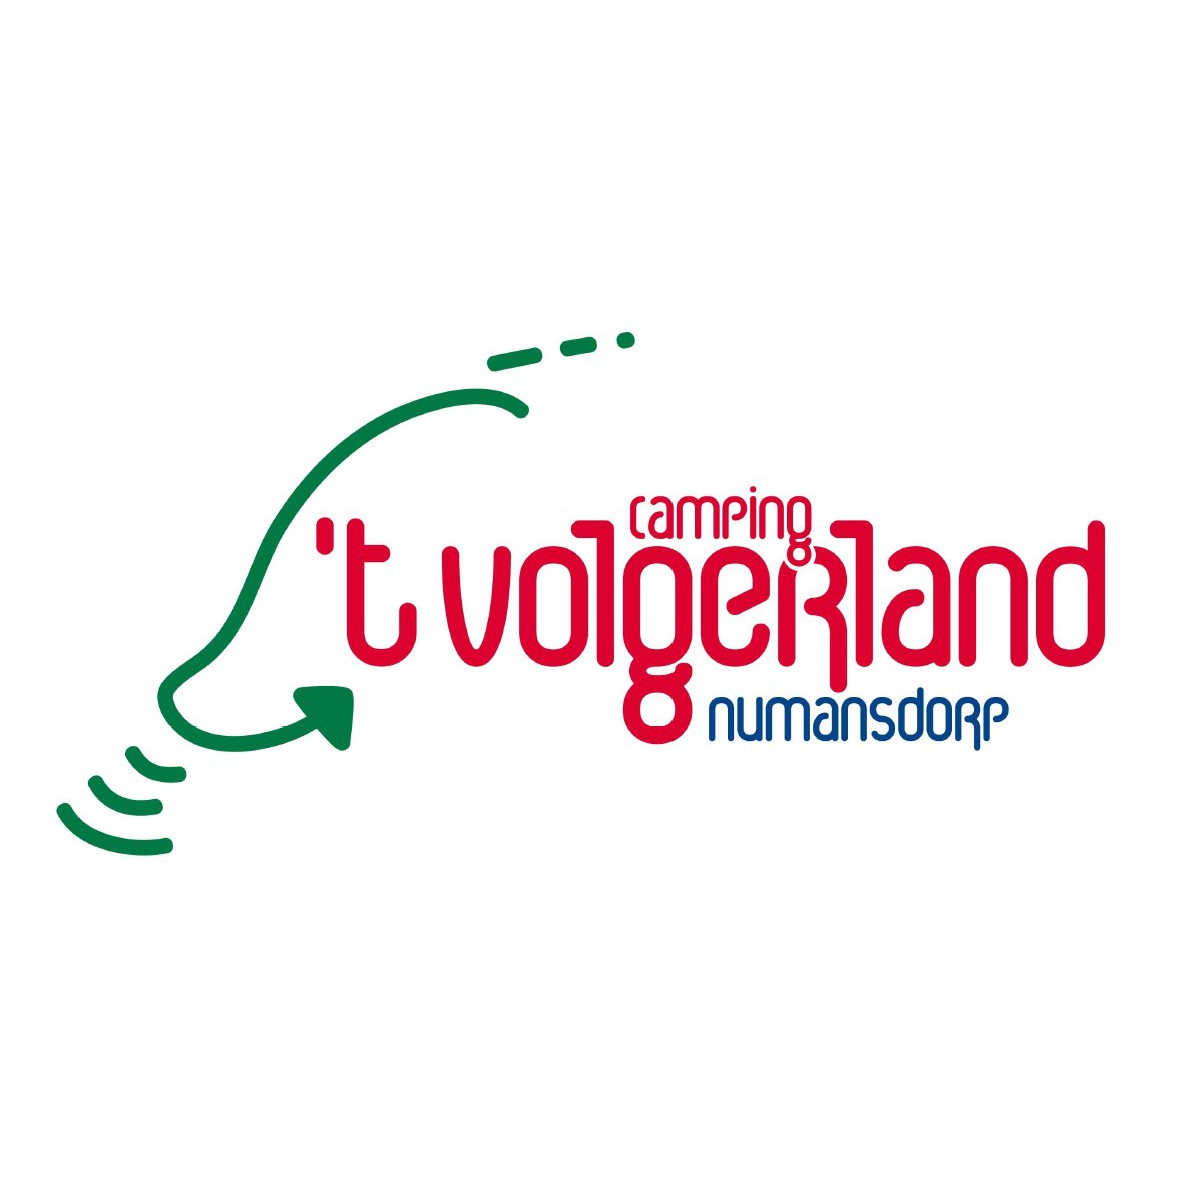 Camping 't Volgerland Logo